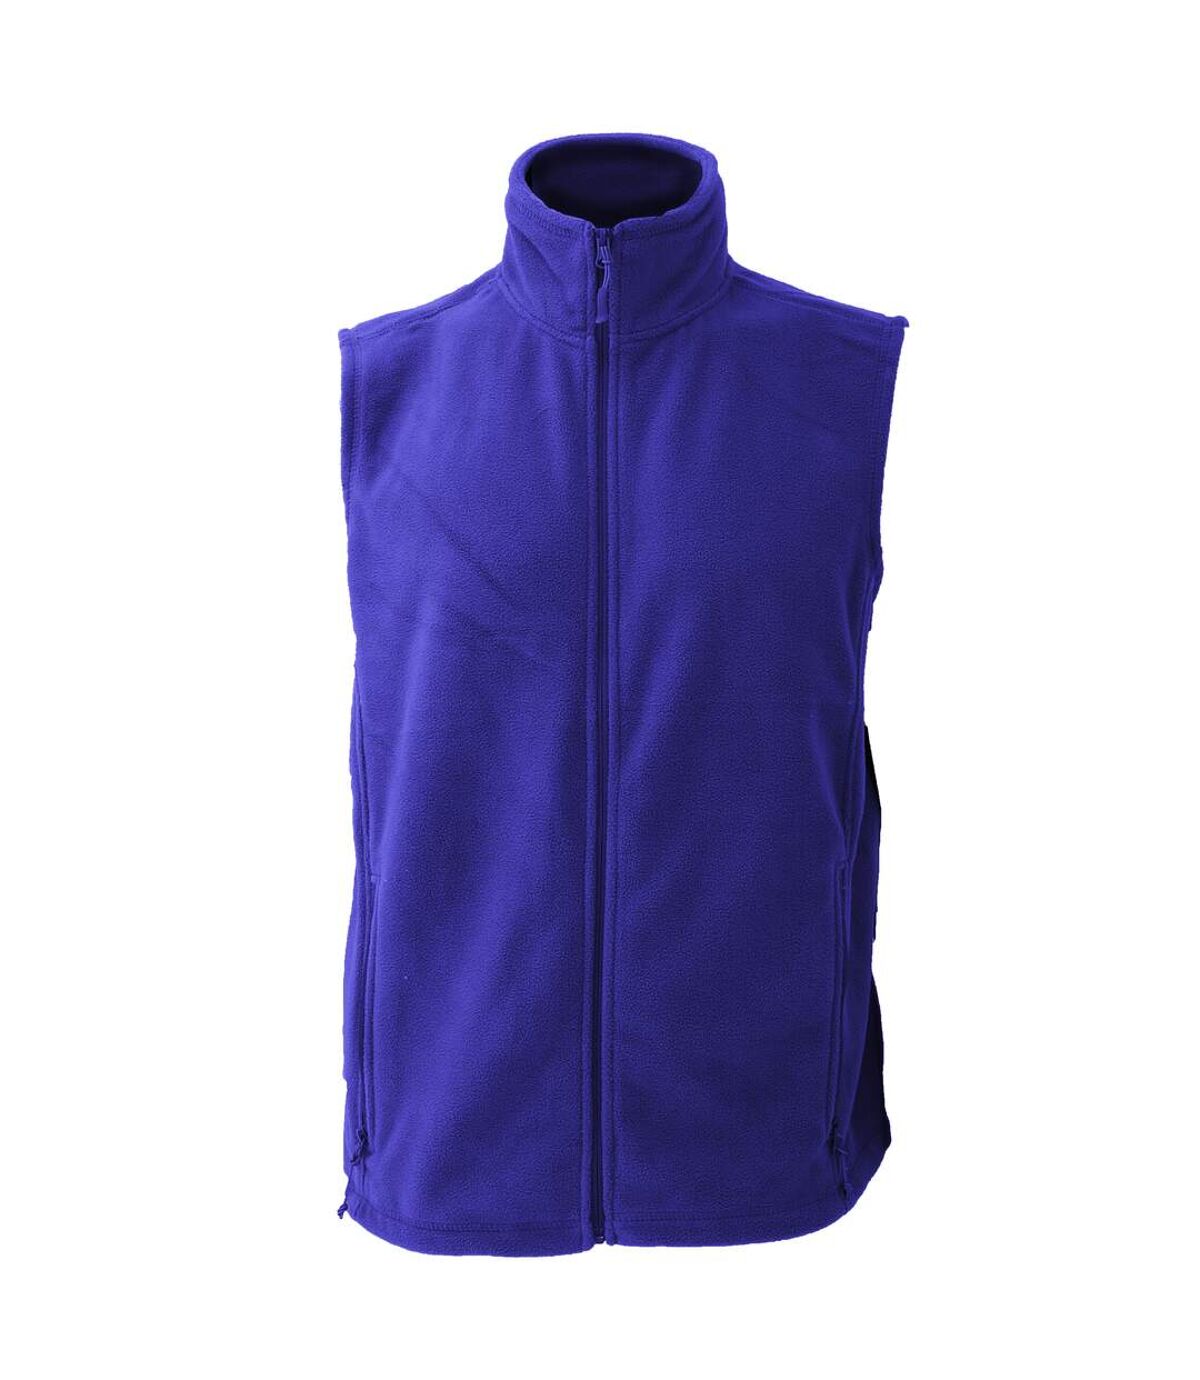 Jerzees Color Fleece Gilet Jacket / Bodywarmer (Bright Royal)